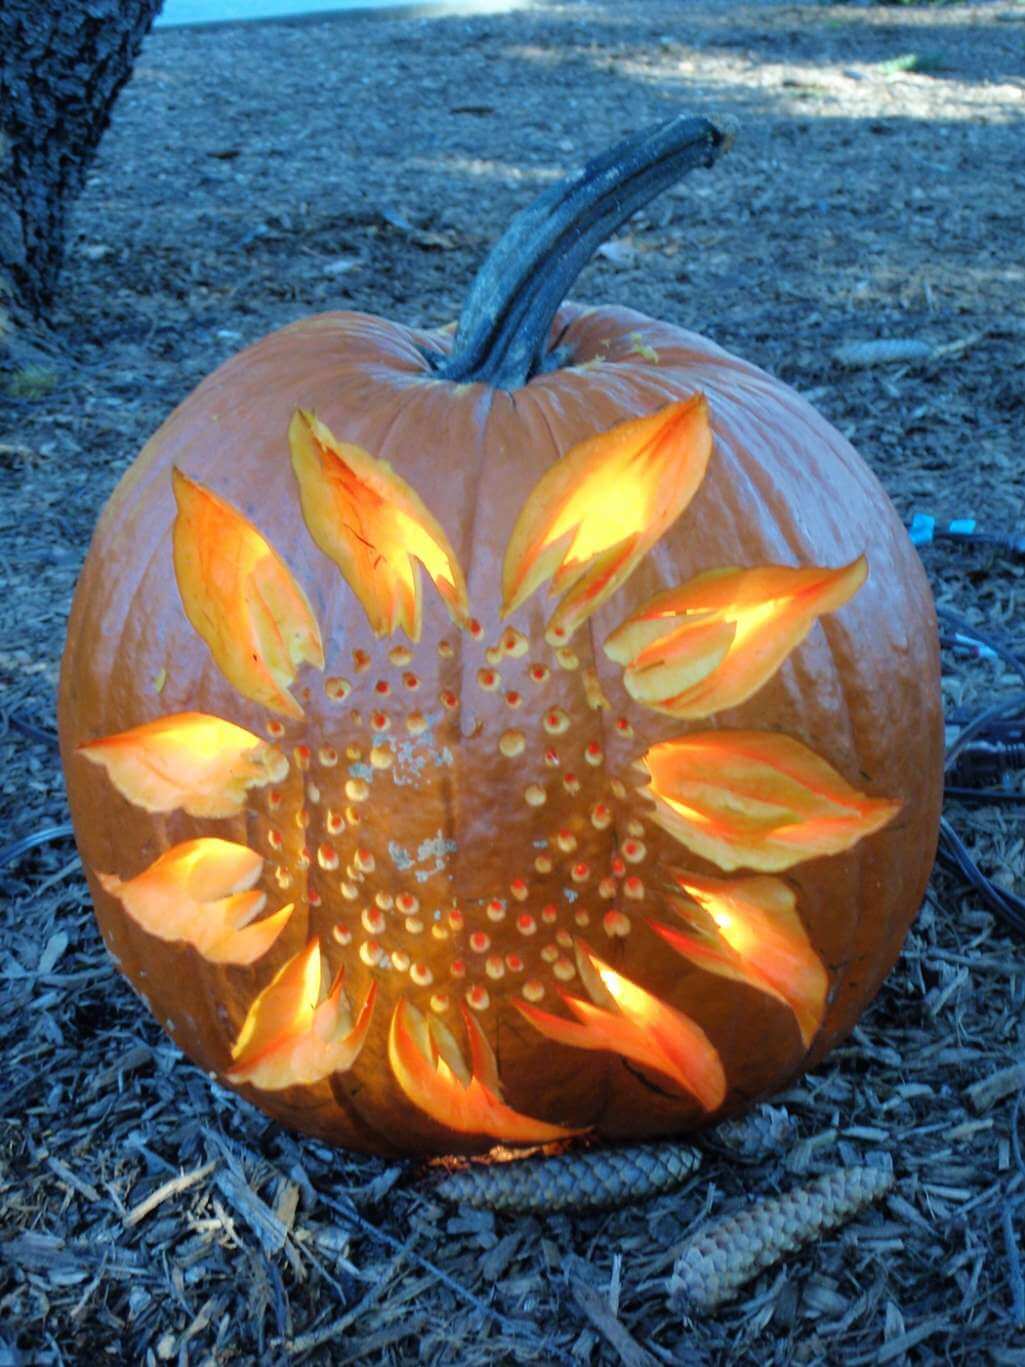 15 Unique Pumpkin Carving Ideas for Halloween